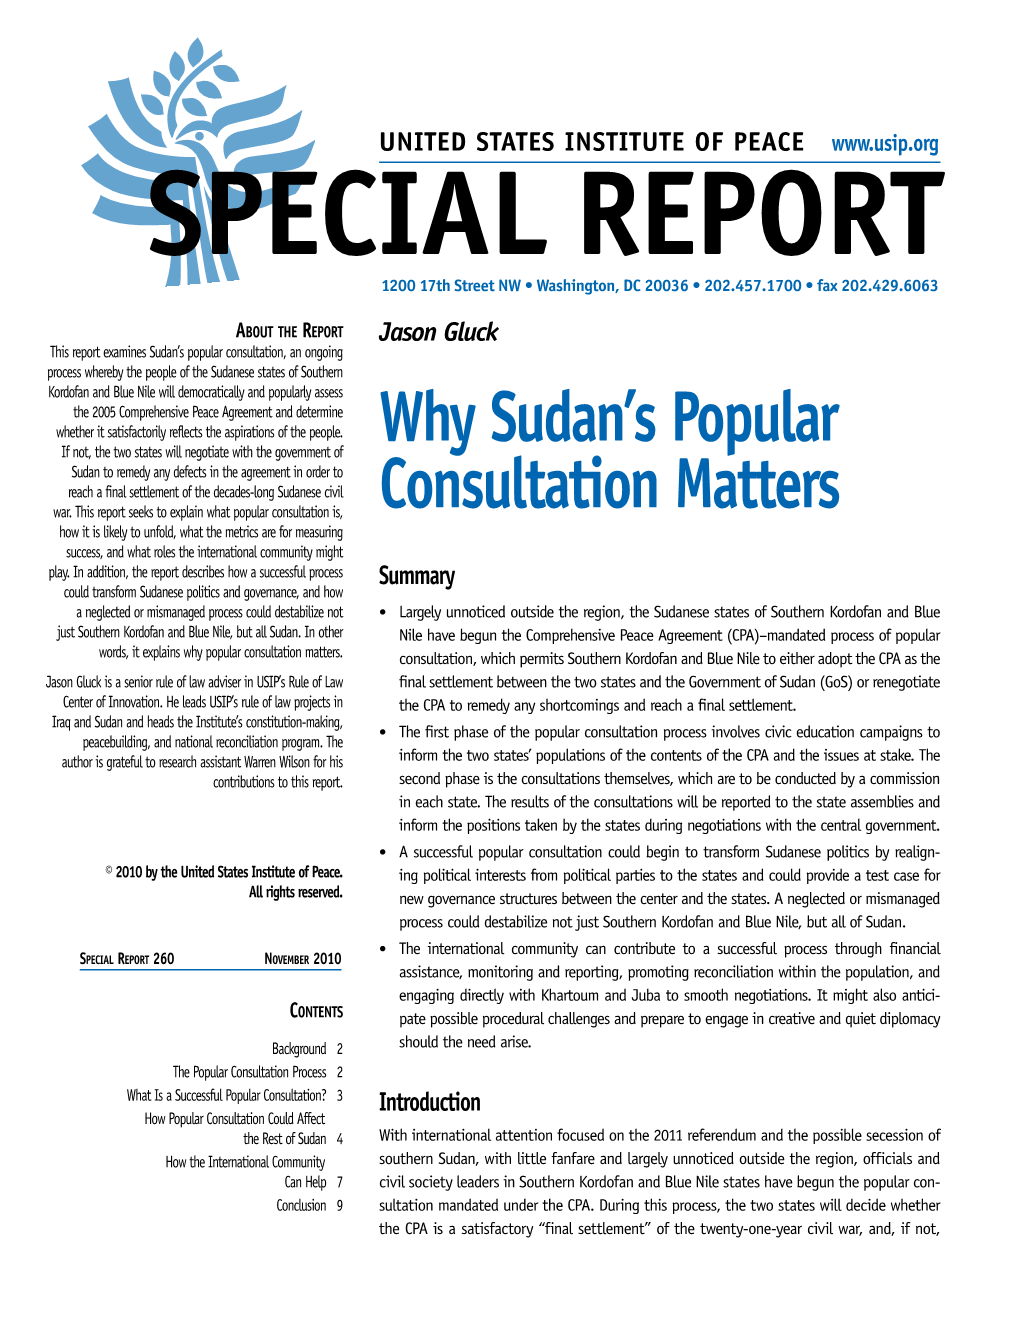 Why Sudan's Popular Consultation Matters